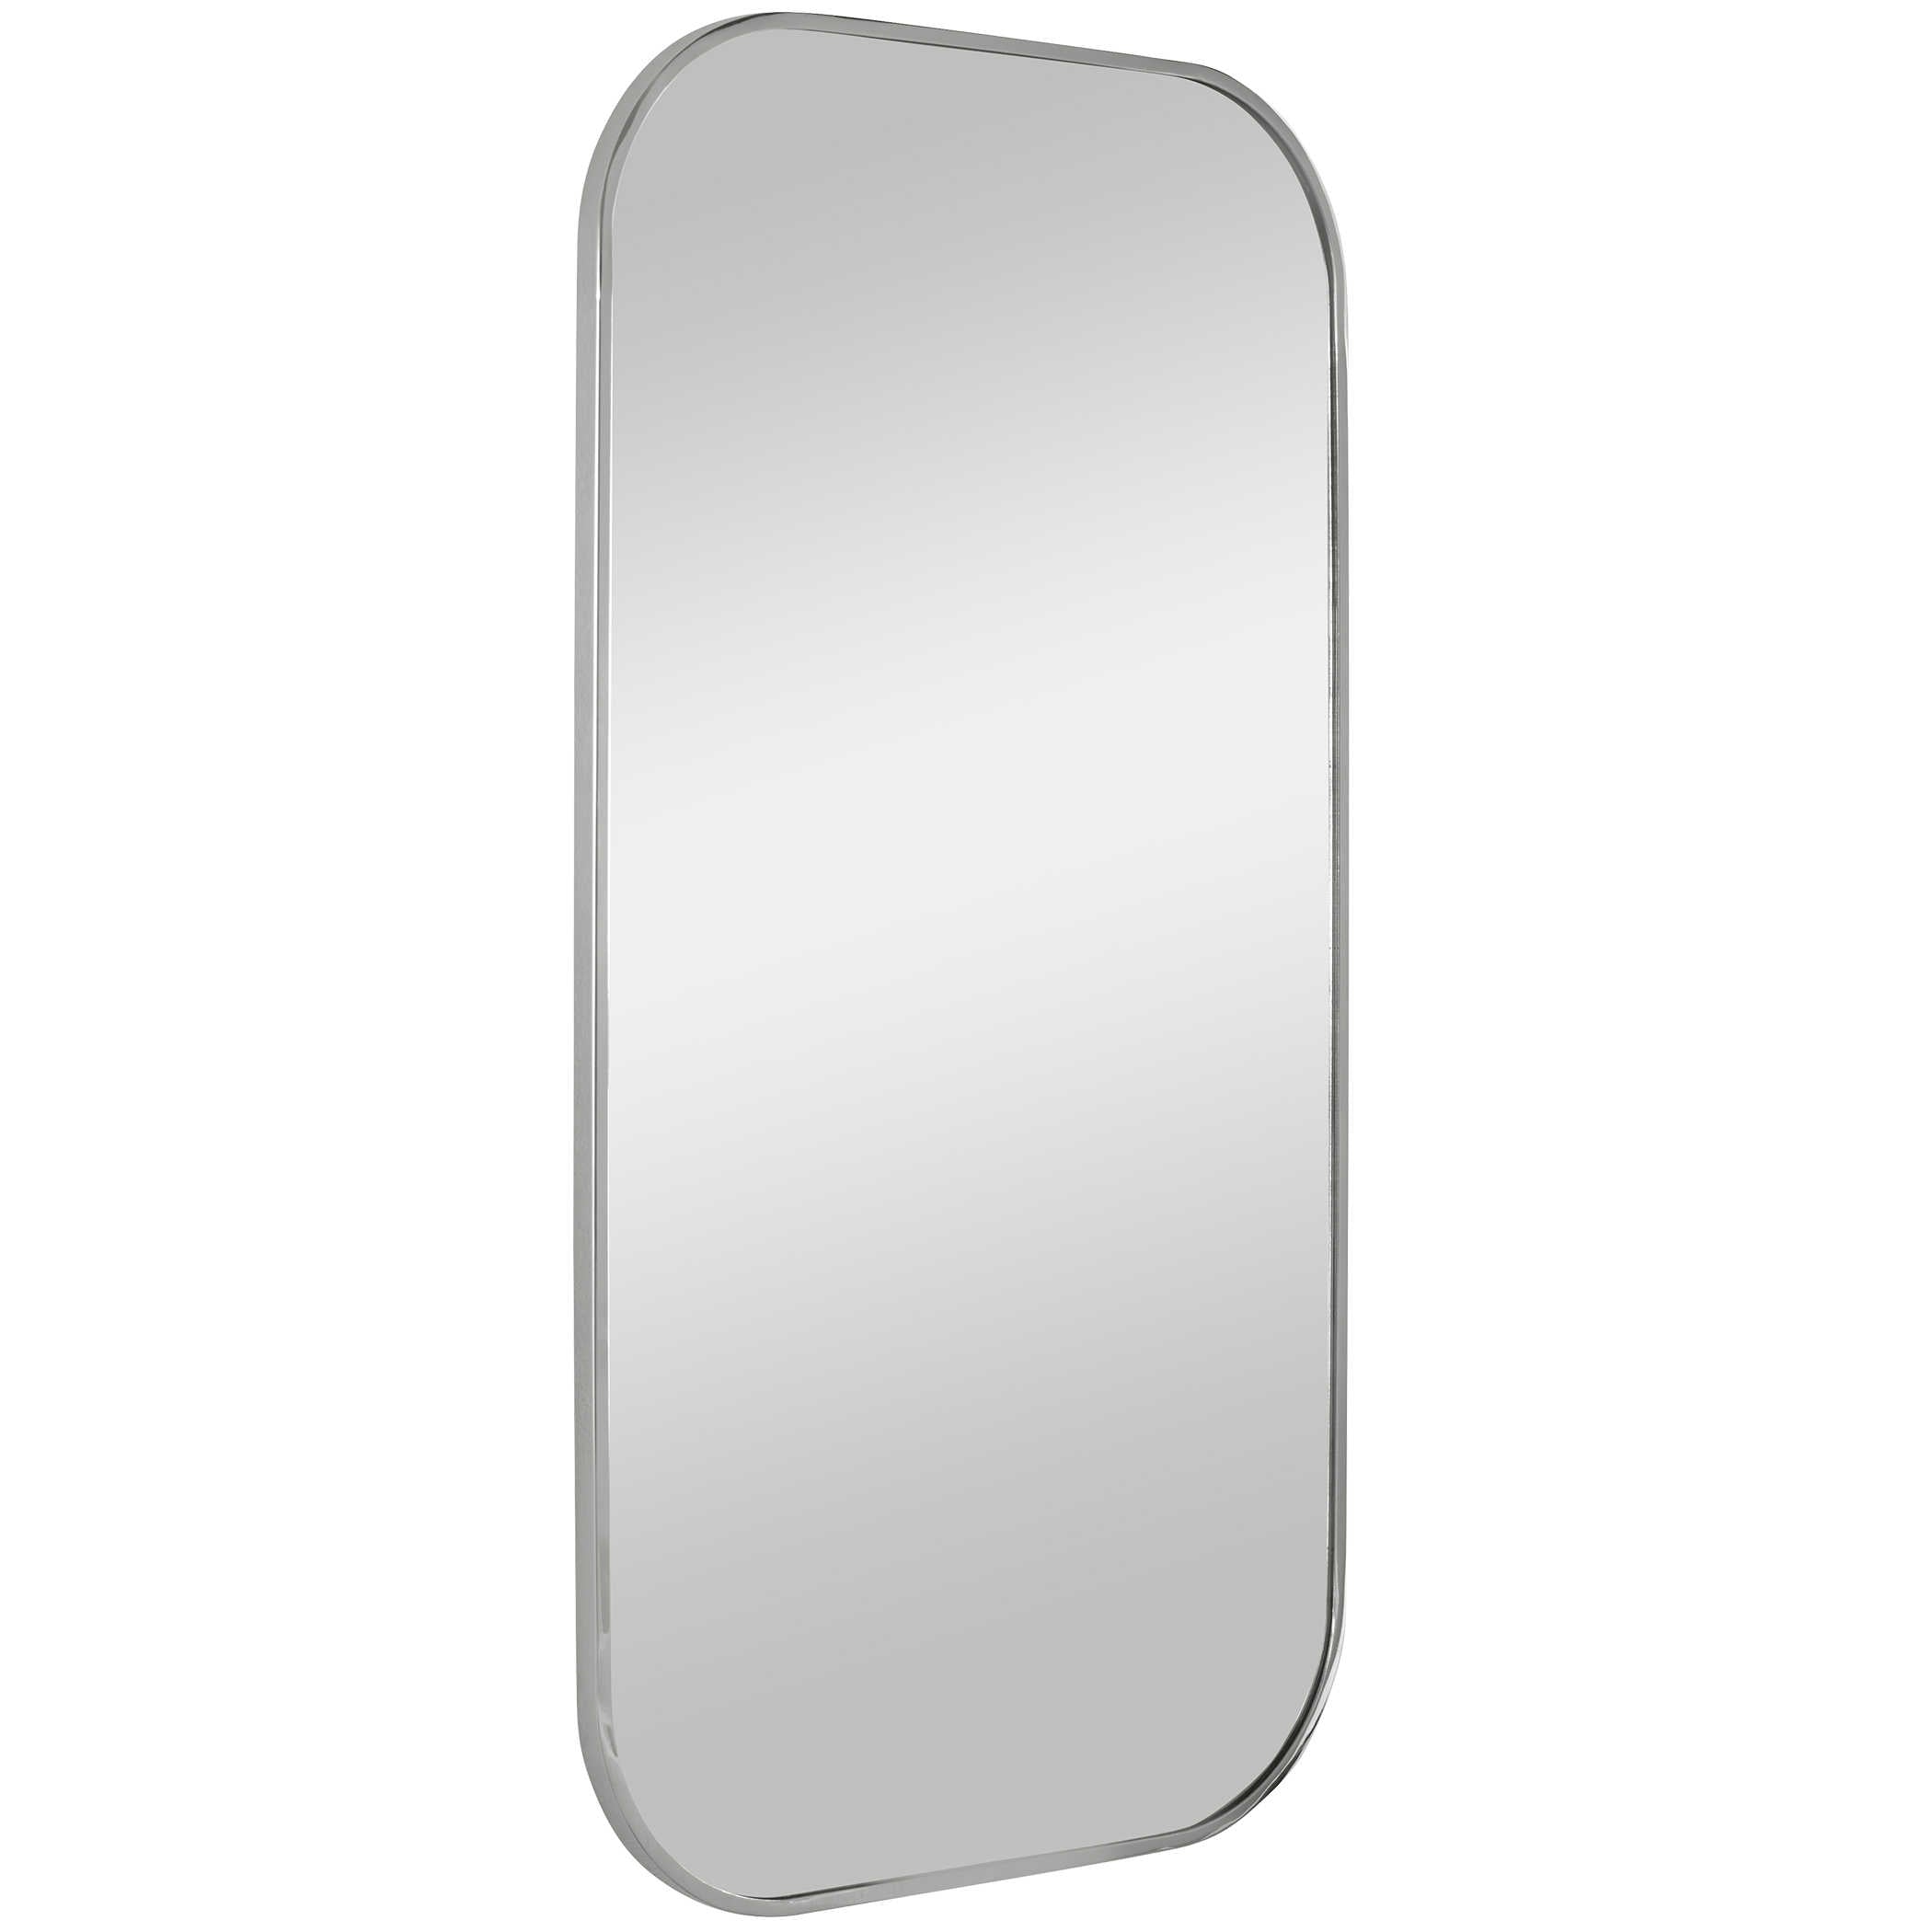 Uttermost Taft Polished Nickel Mirror Polished Nickel Mirror Uttermost STAINLESS STEEL, MDF, GLASS  